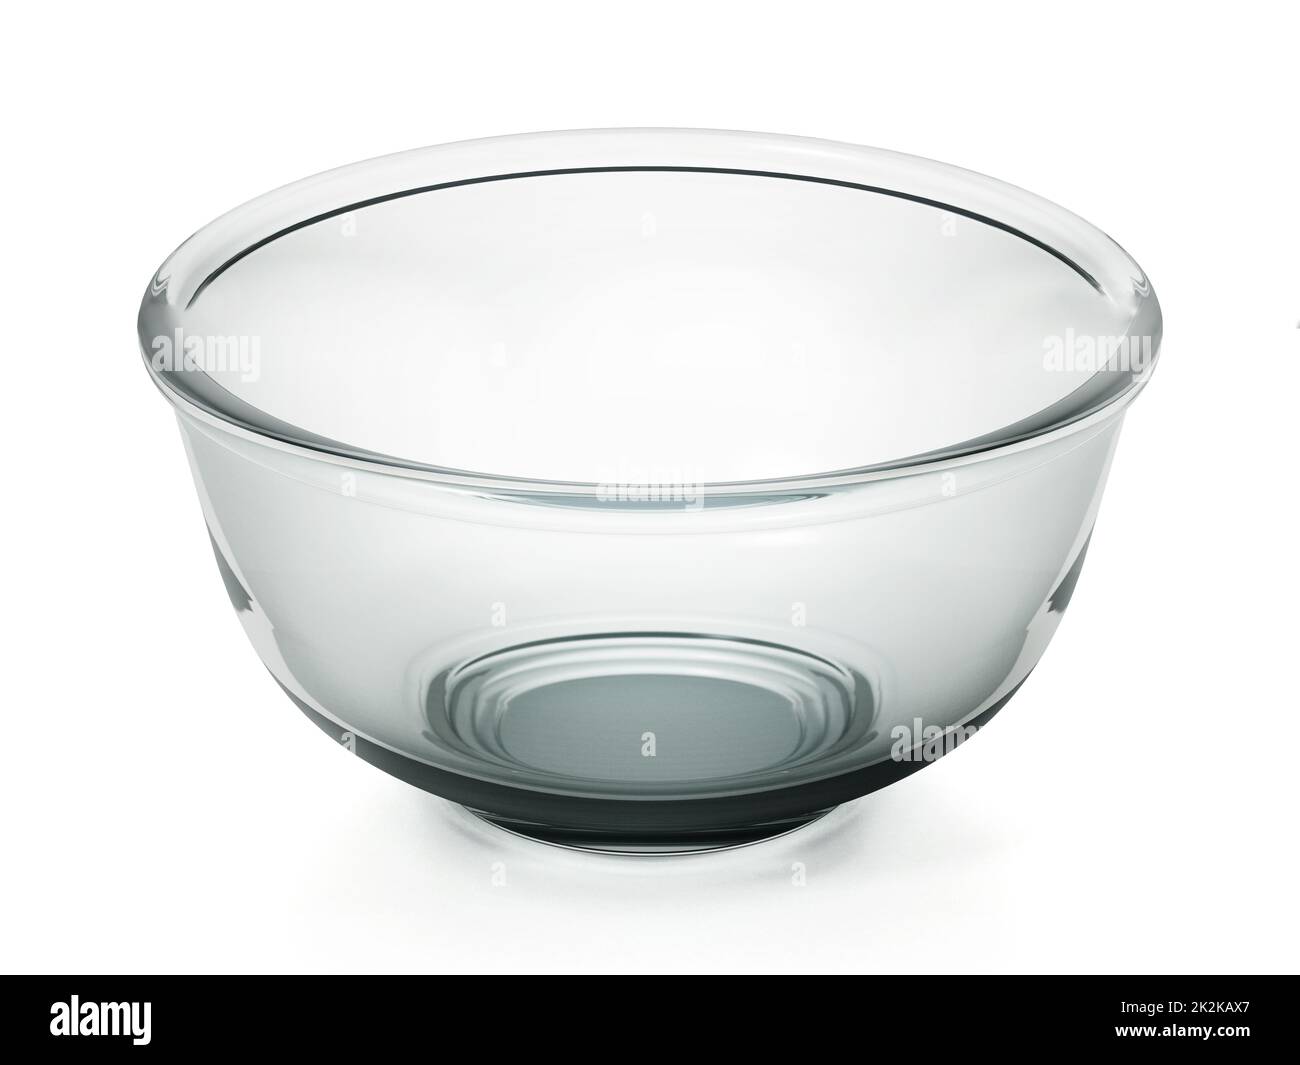 https://c8.alamy.com/comp/2K2KAX7/glass-bowl-isolated-on-white-background-3d-illustration-2K2KAX7.jpg